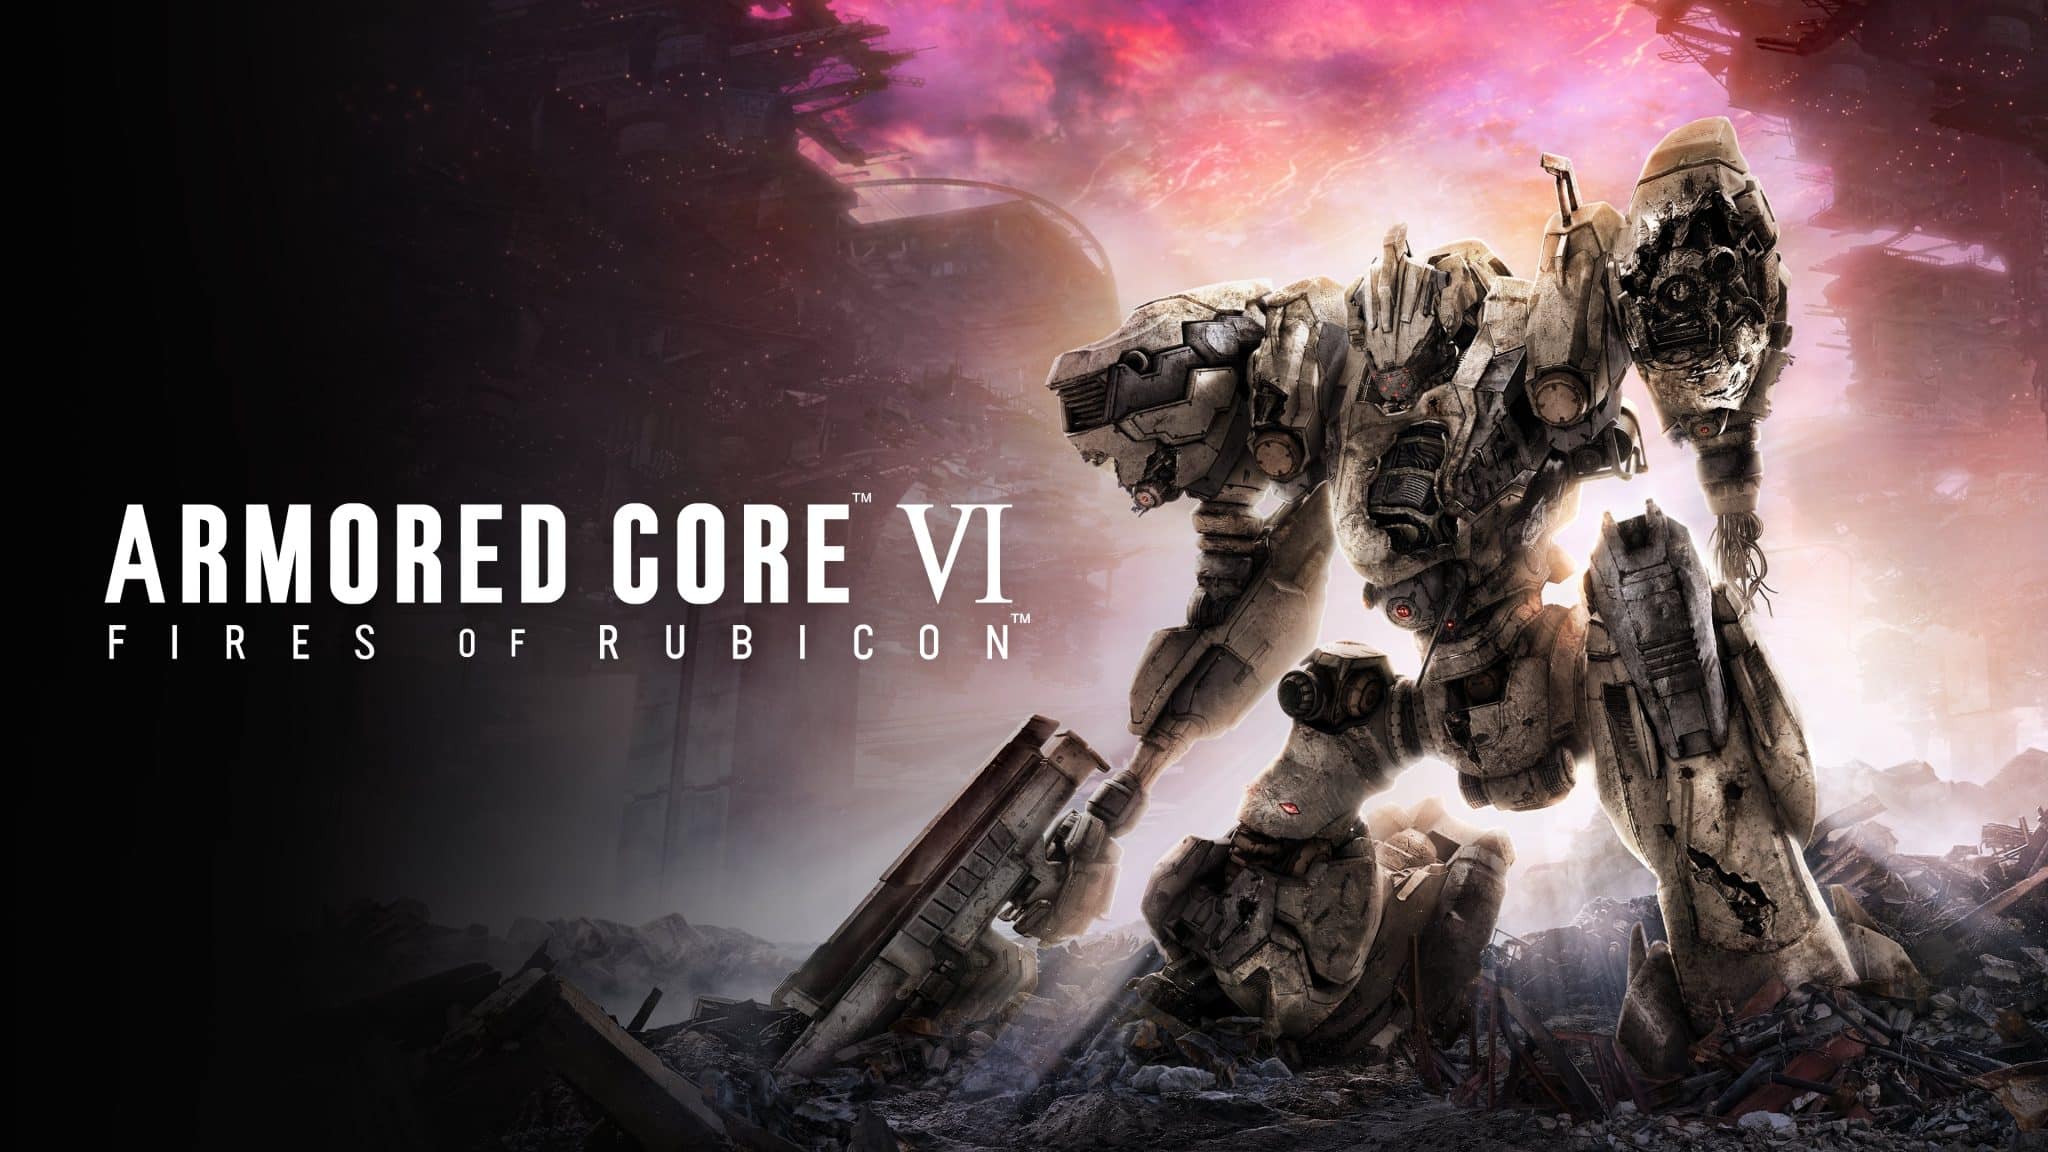 Armored Core VI: Fires of Rubicon larga com nota 88 no Metacritic -  NerdBunker